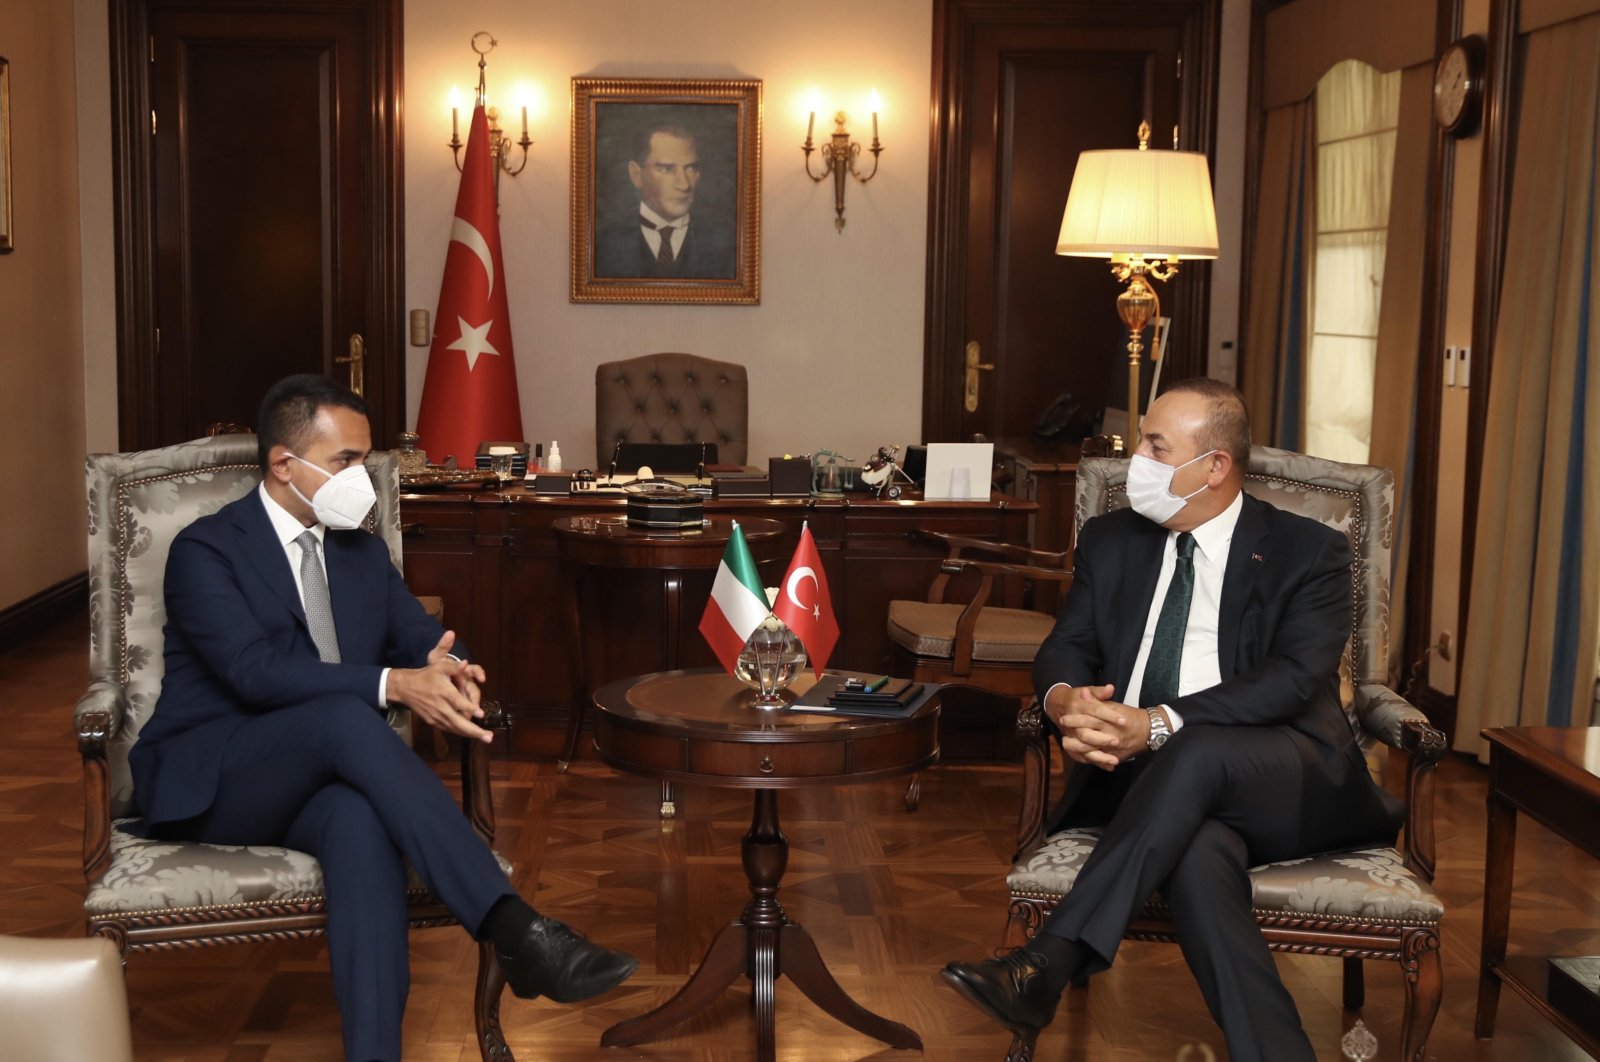 Foreign Minister Mevlüt Çavuşoğlu and his Italian counterpart Luigi Di Maio are seen during a meeting in the capital Ankara, June 20, 2020. (AA Photo)